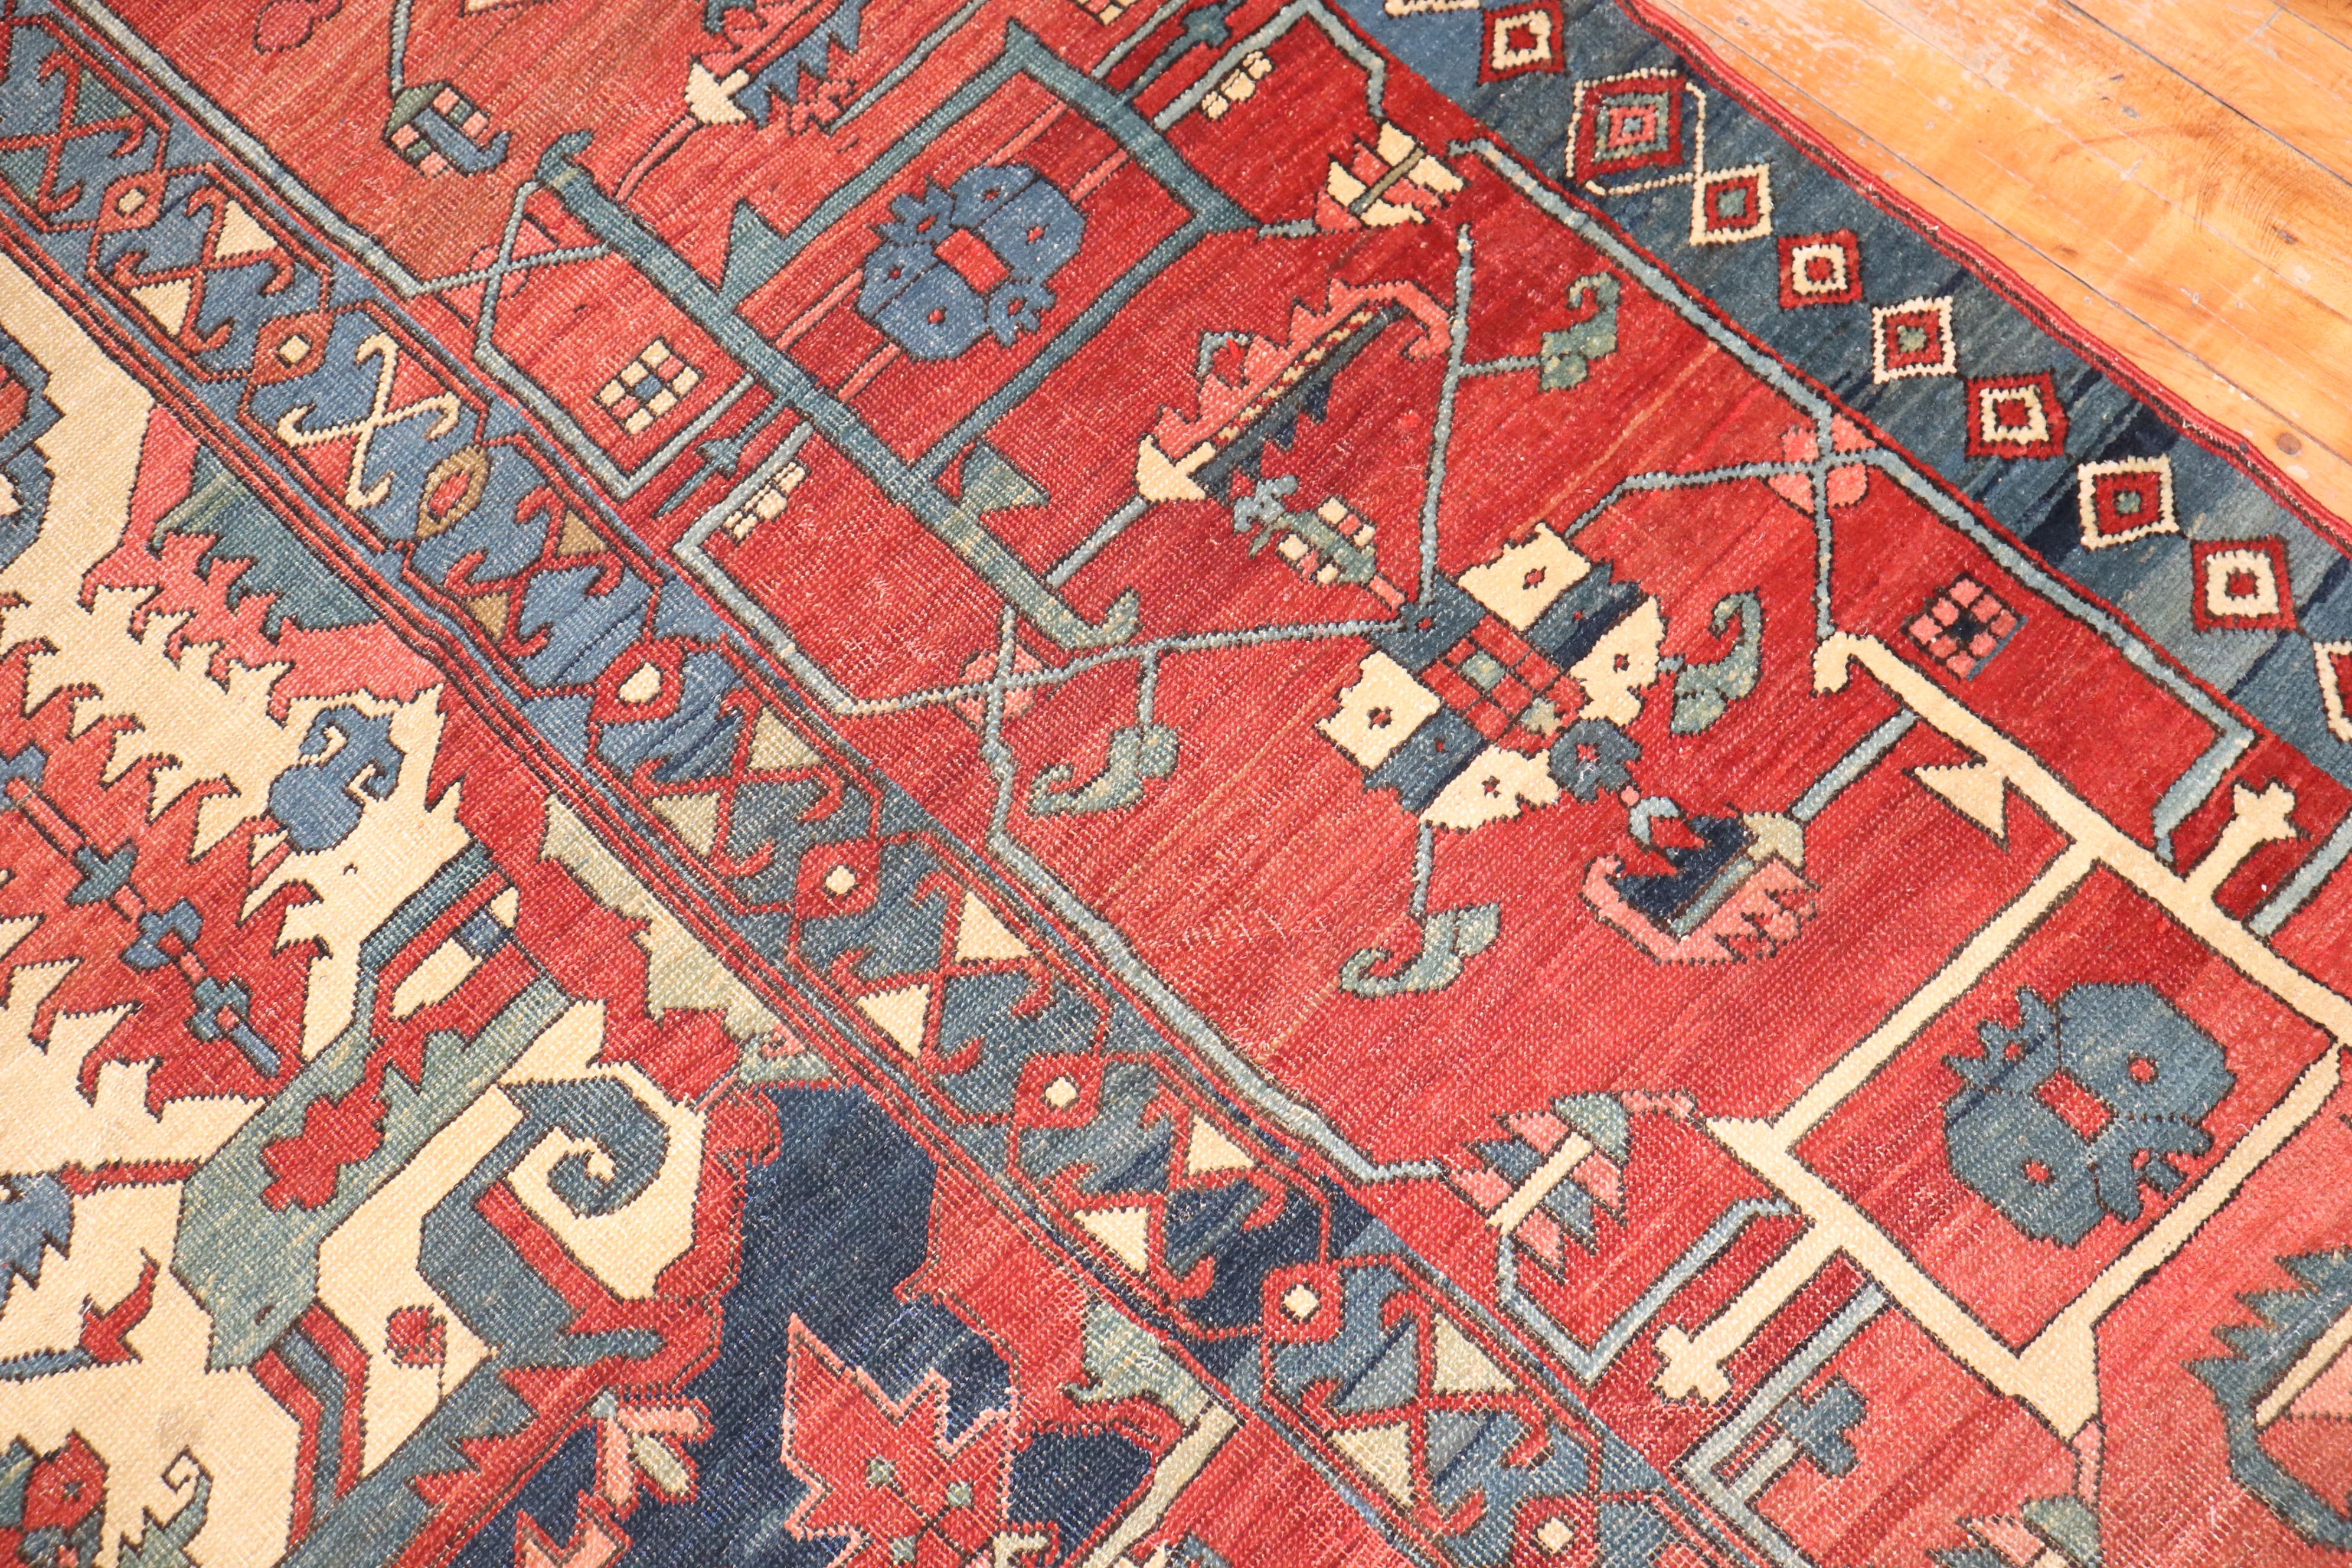 19th Century Zabihi Collection Pictorial Animal Figure Antique Persian Serapi Carpet For Sale